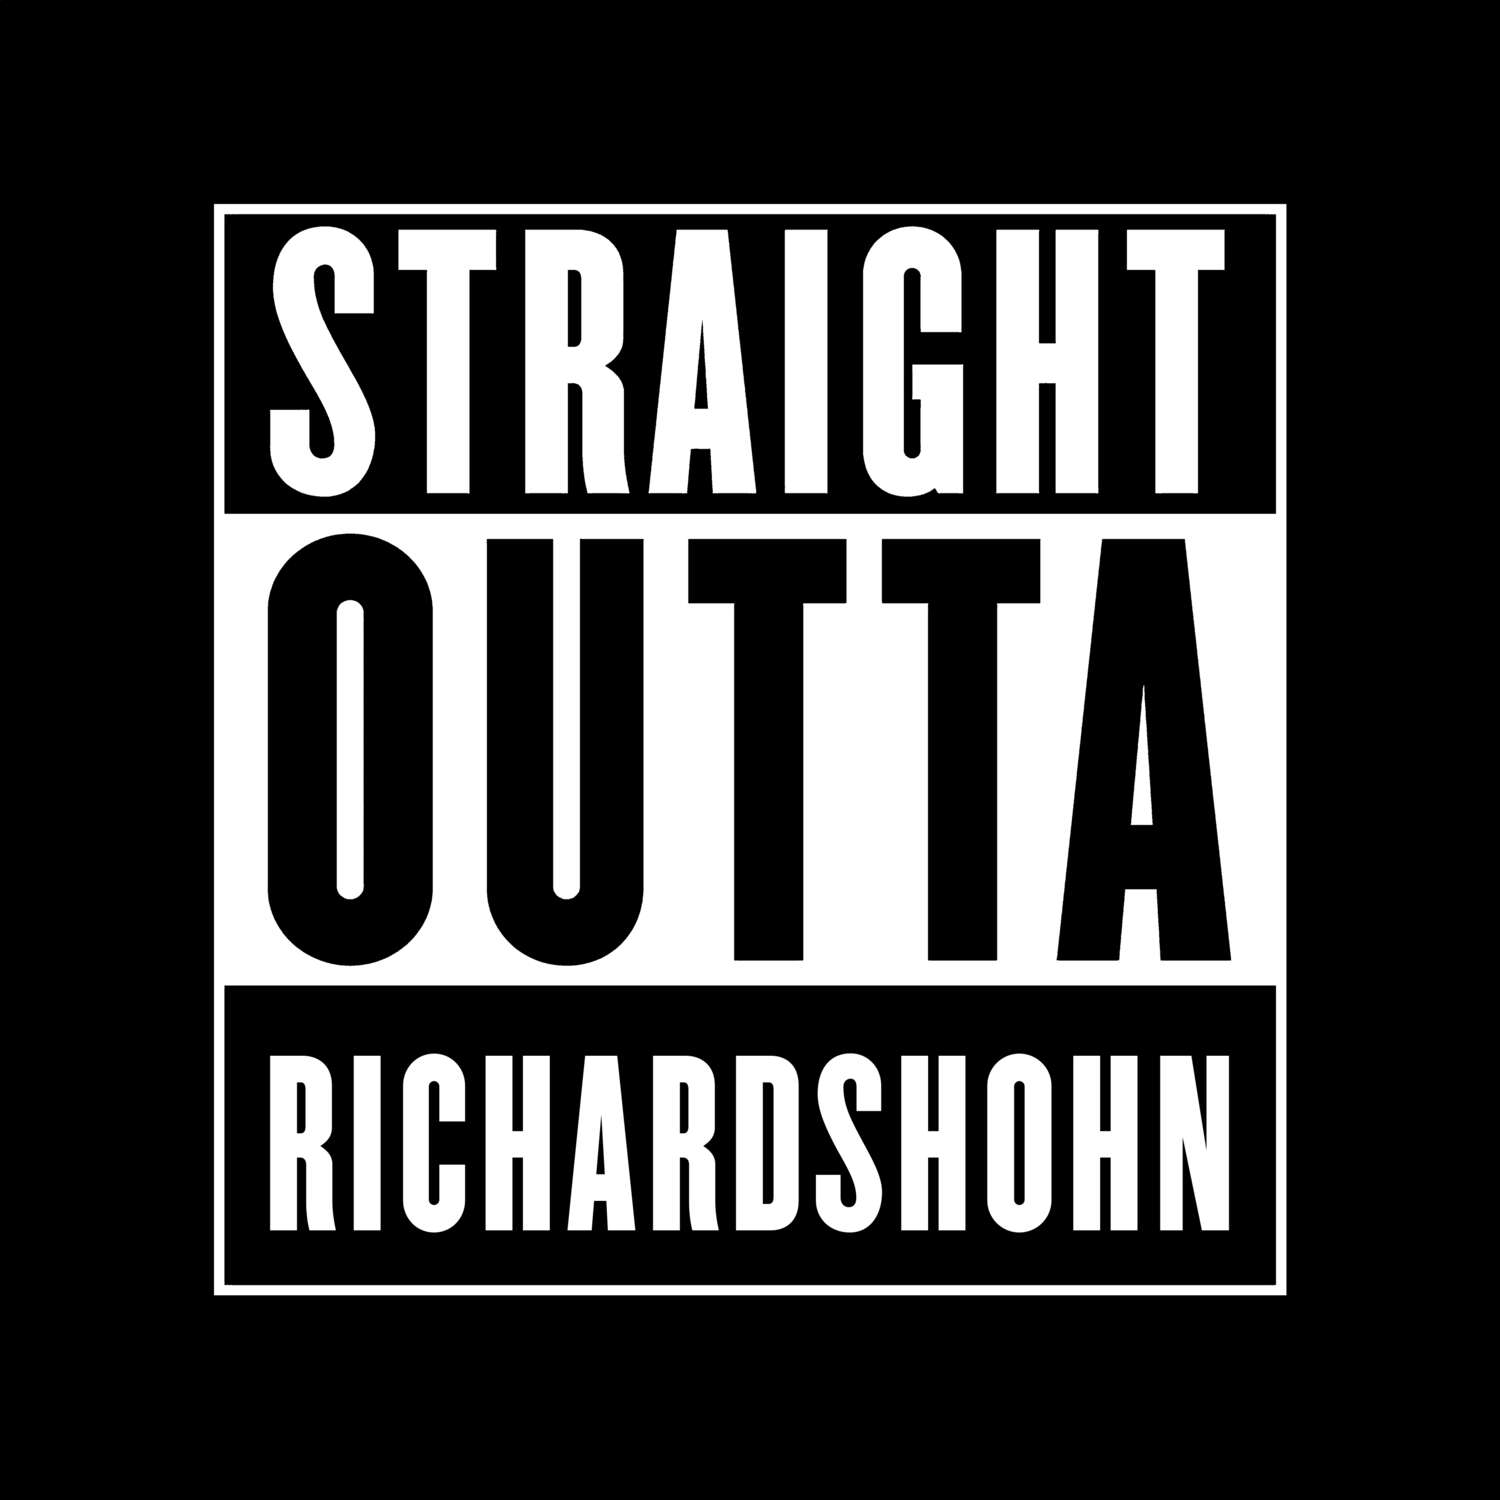 Richardshohn T-Shirt »Straight Outta«